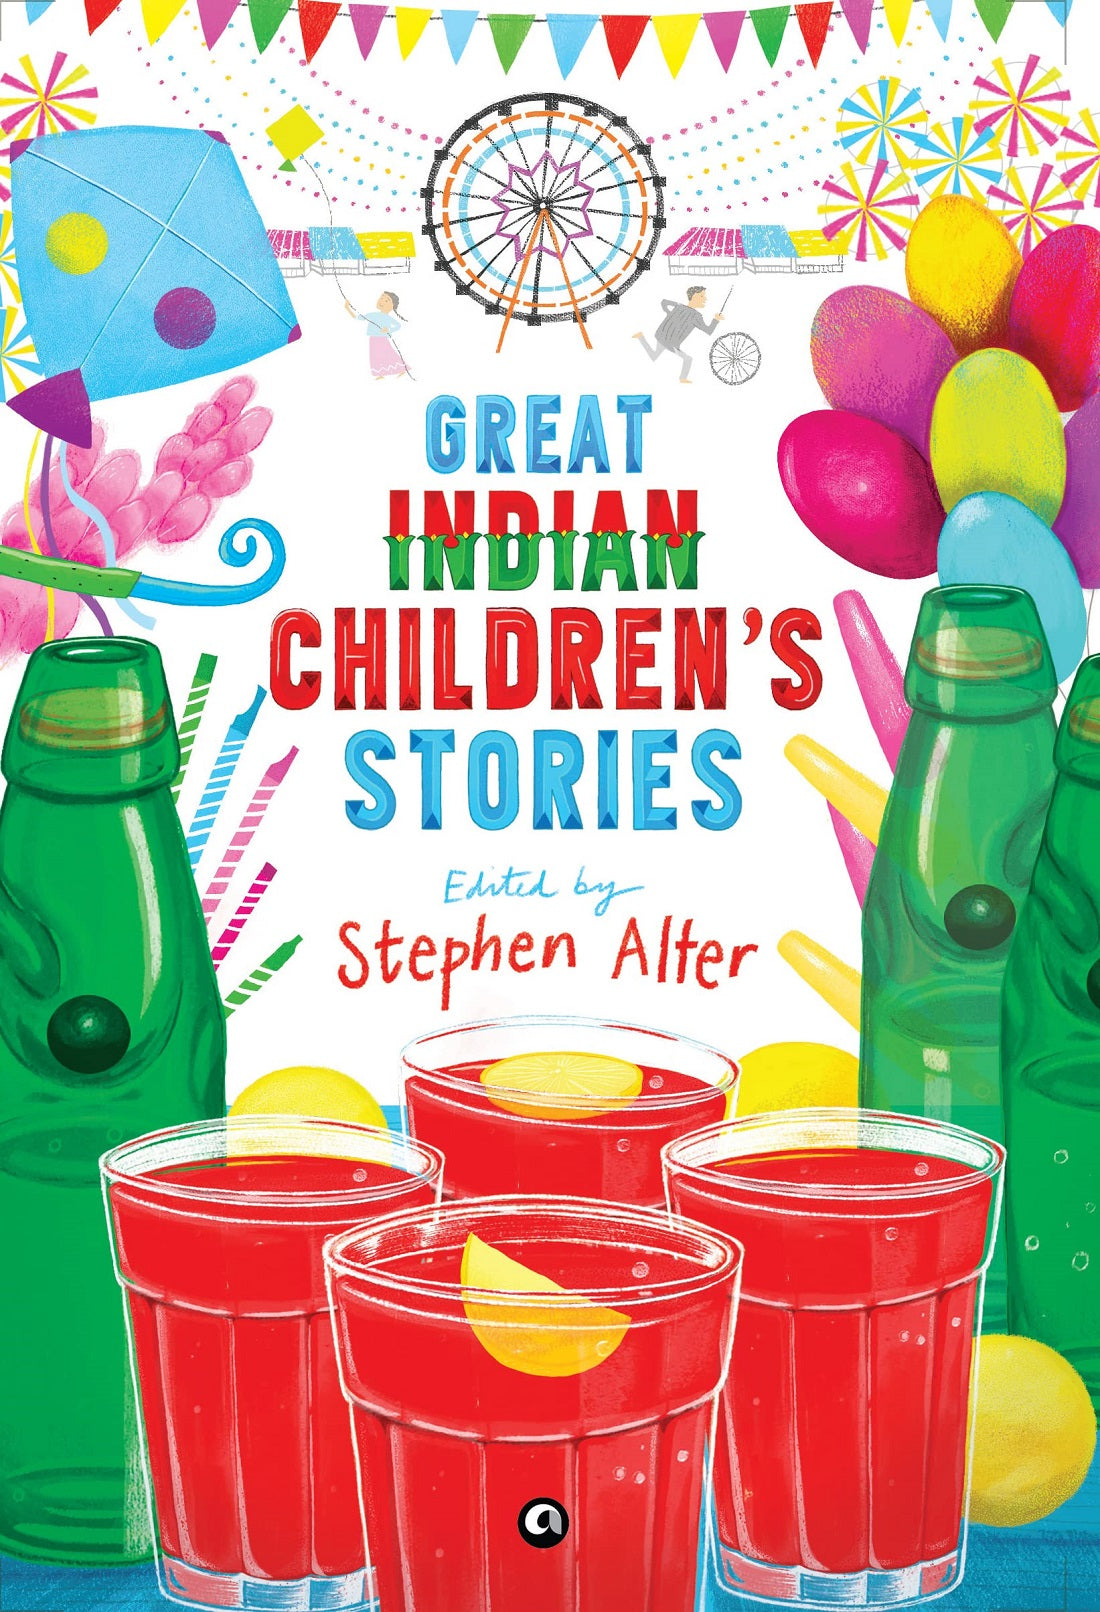 GREAT INDIAN CHILDREN'S STORIES